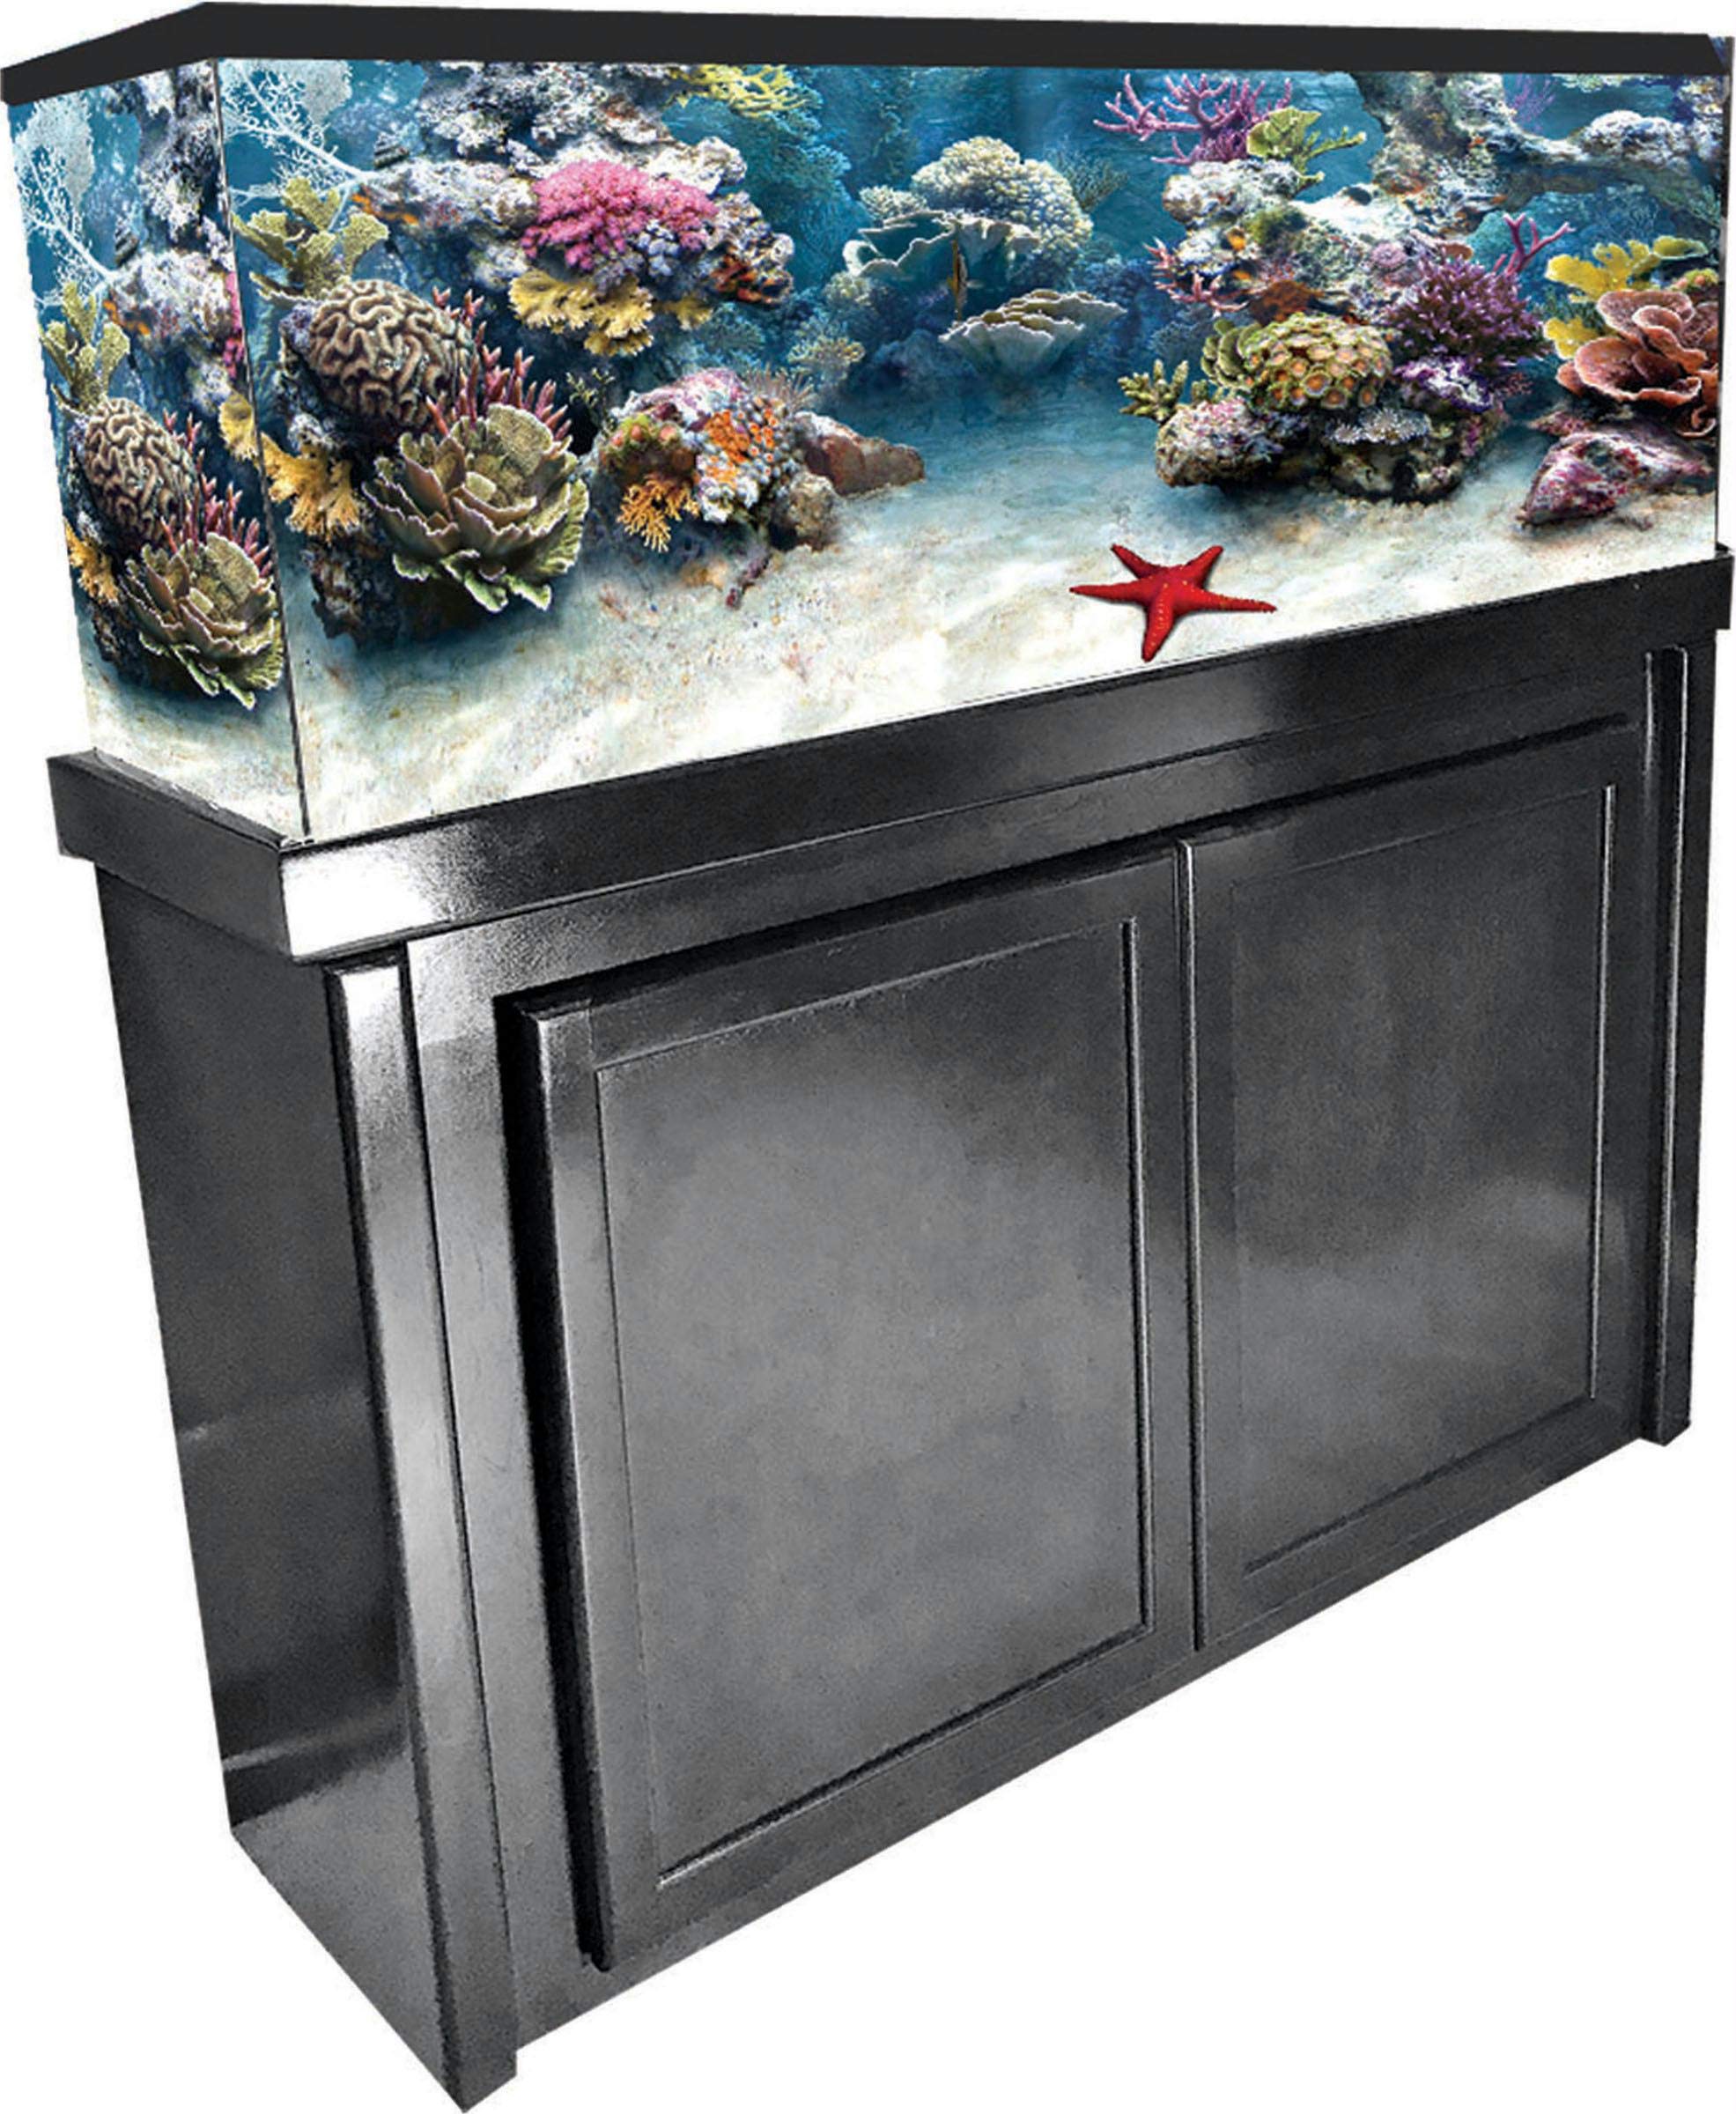 R&J Enterprises Birch Series Cabinet Aquarium Stand - Black - L:48" X W:24" X H:30" Inches  